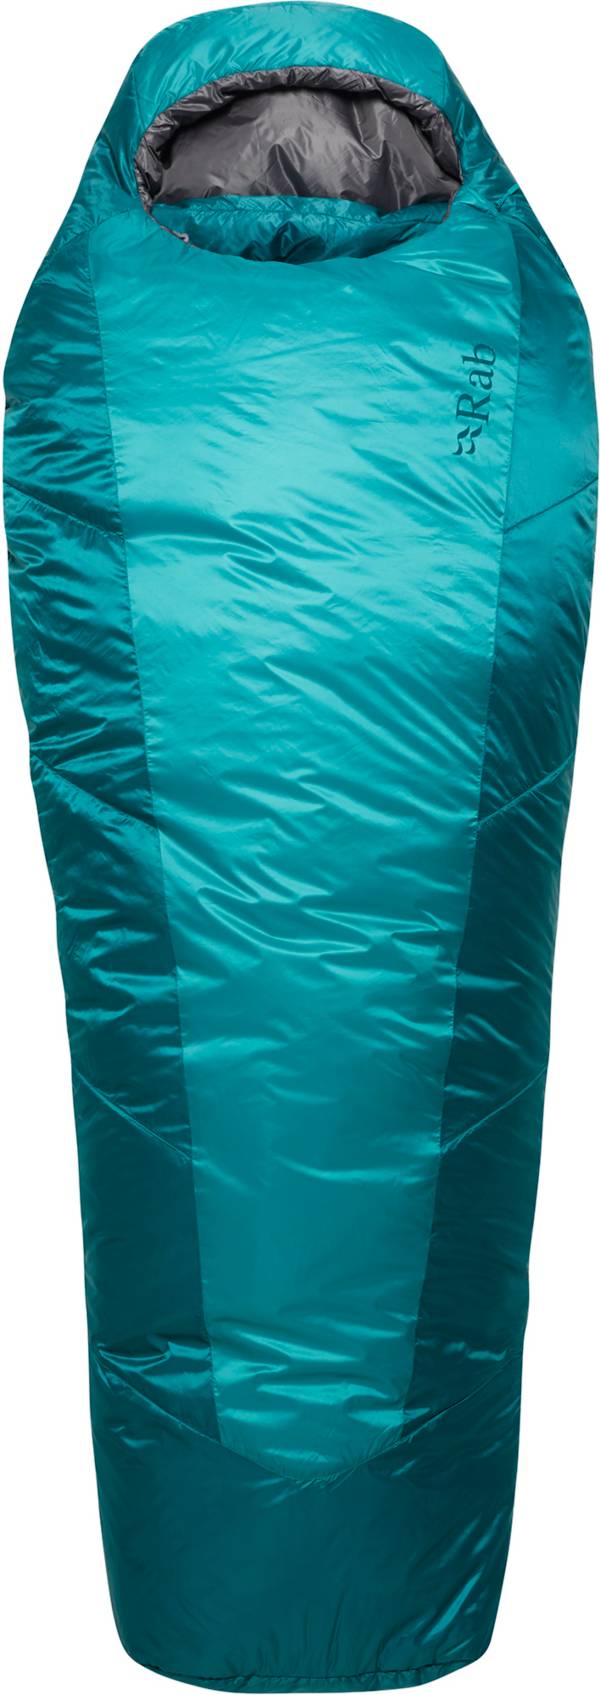 Rab Women's Solar Eco 2 Sleeping Bag 30 product image